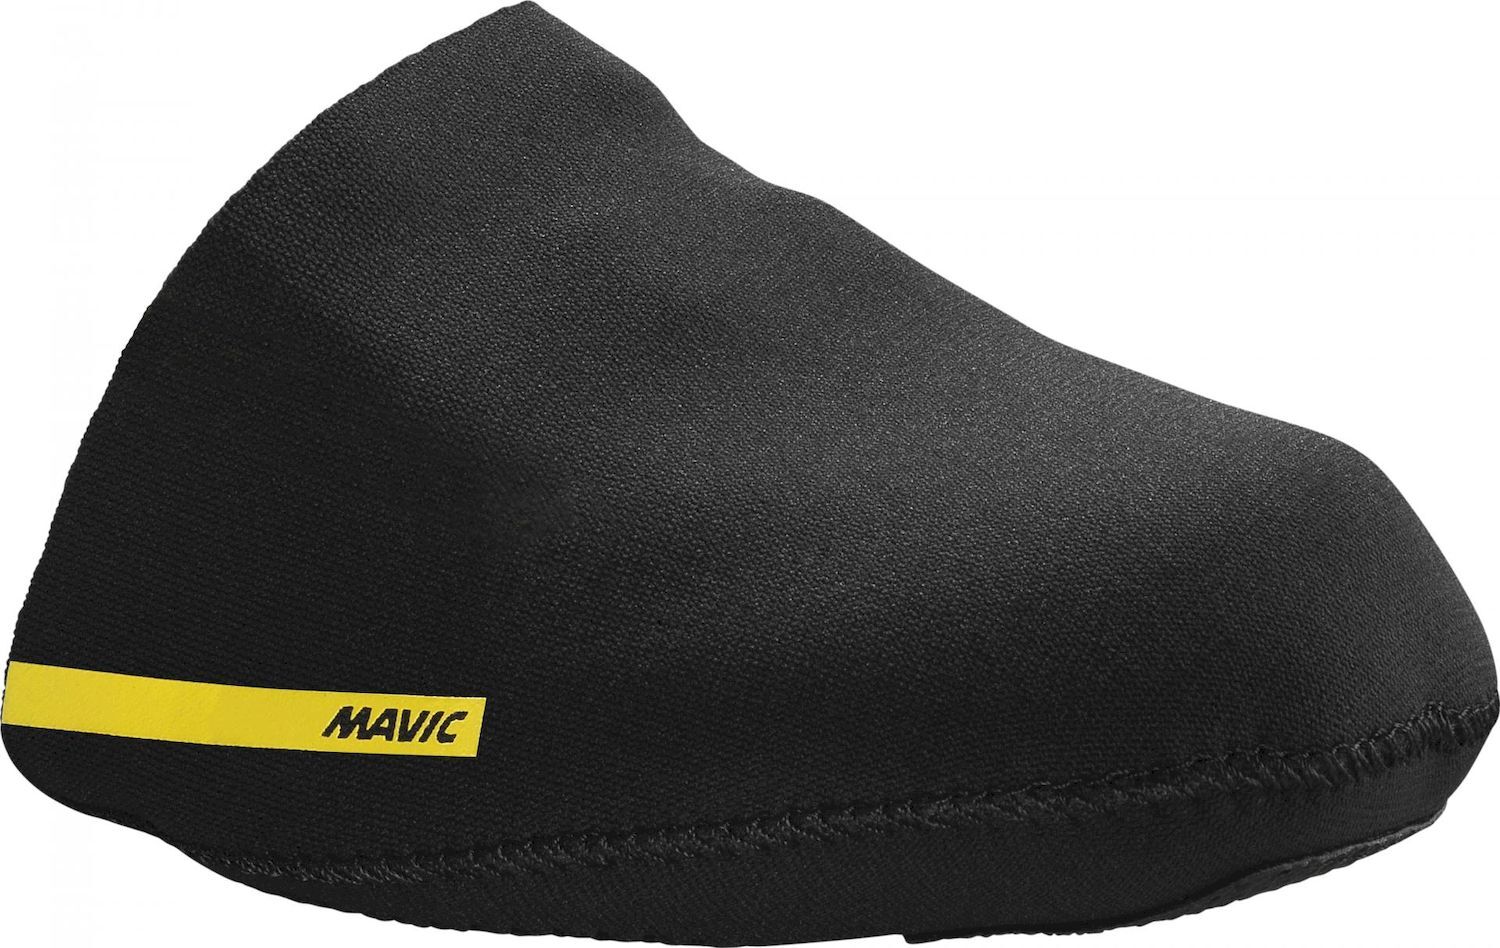 Mavic Toe Warmer - Cycling overshoes